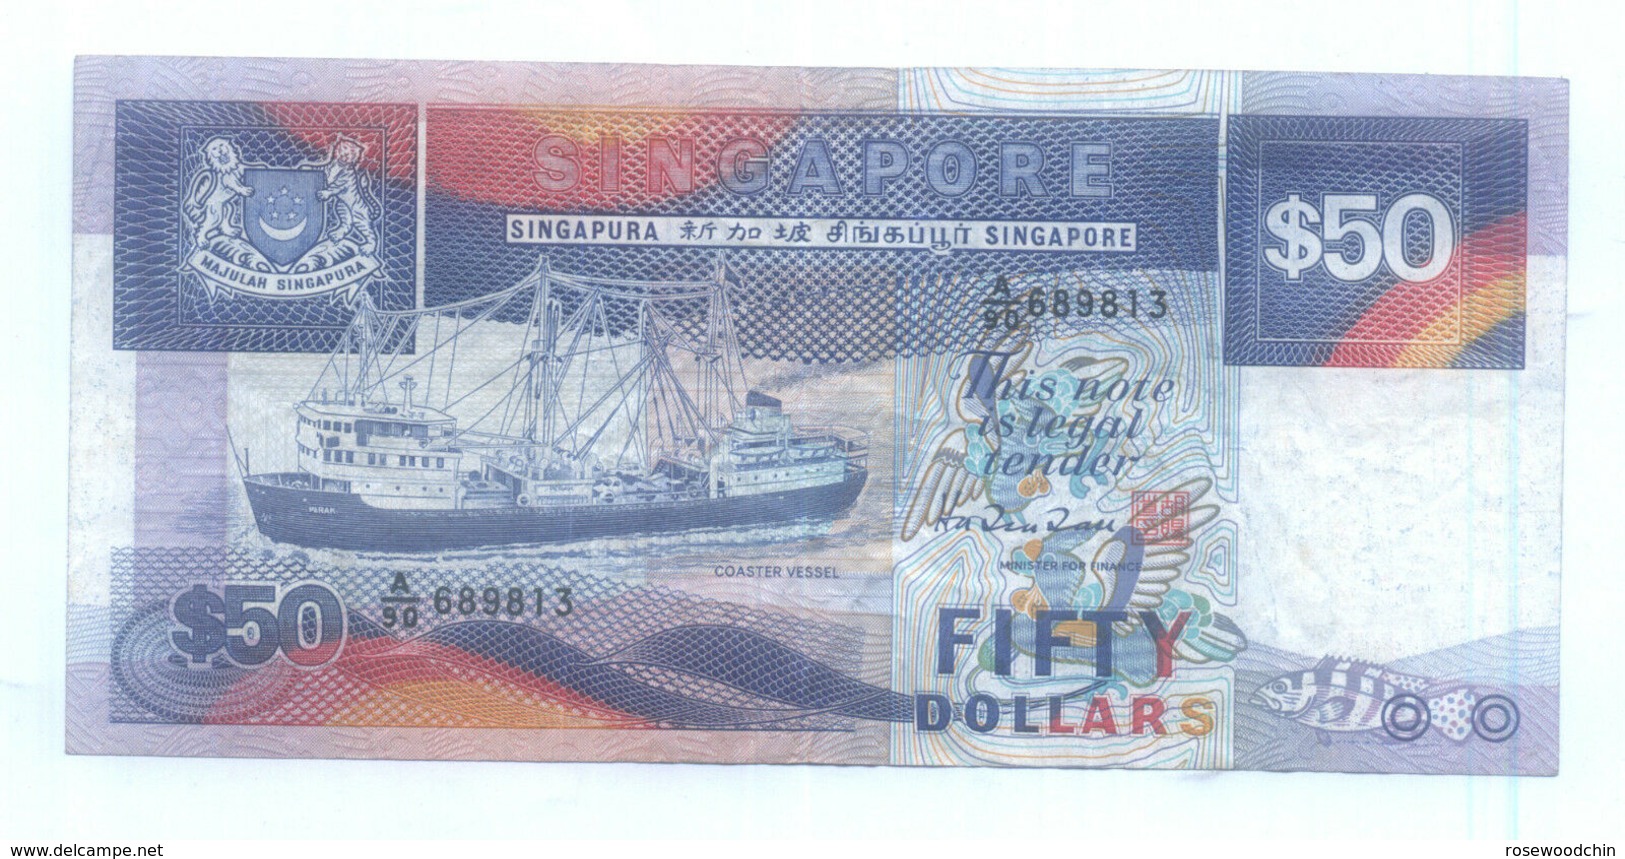 RARE !! SINGAPORE $50 Ship Series Coaster Vessel  CURRENCY MONEY BANKNOTE 'A' PREFIX (#2) - Singapour